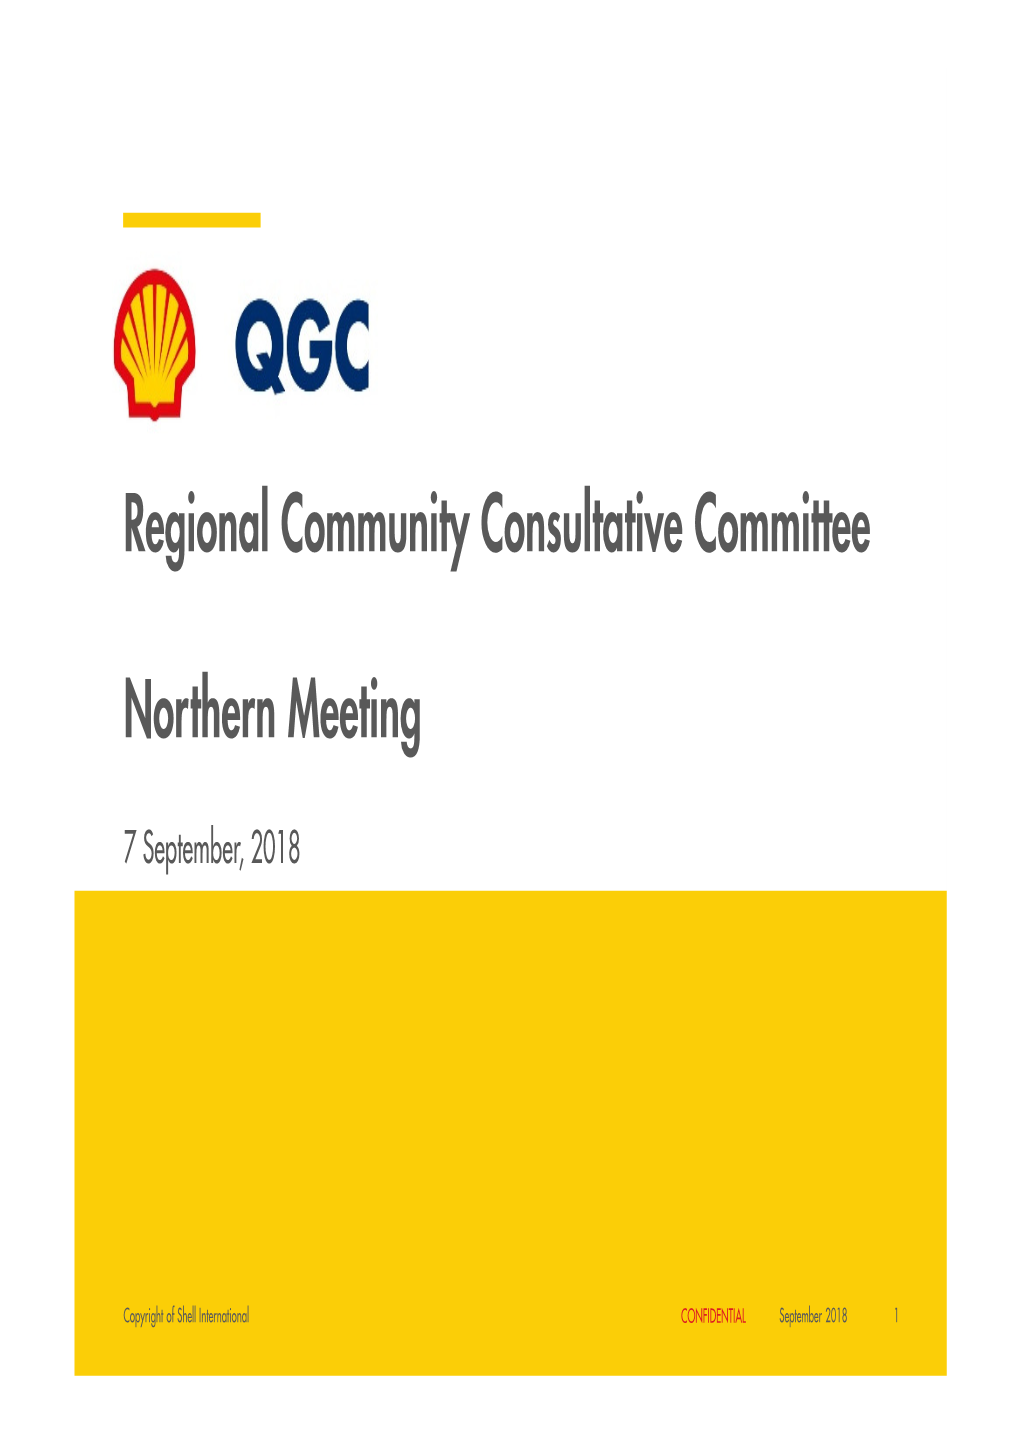 Regional Community Consultative Committee Northern Meeting